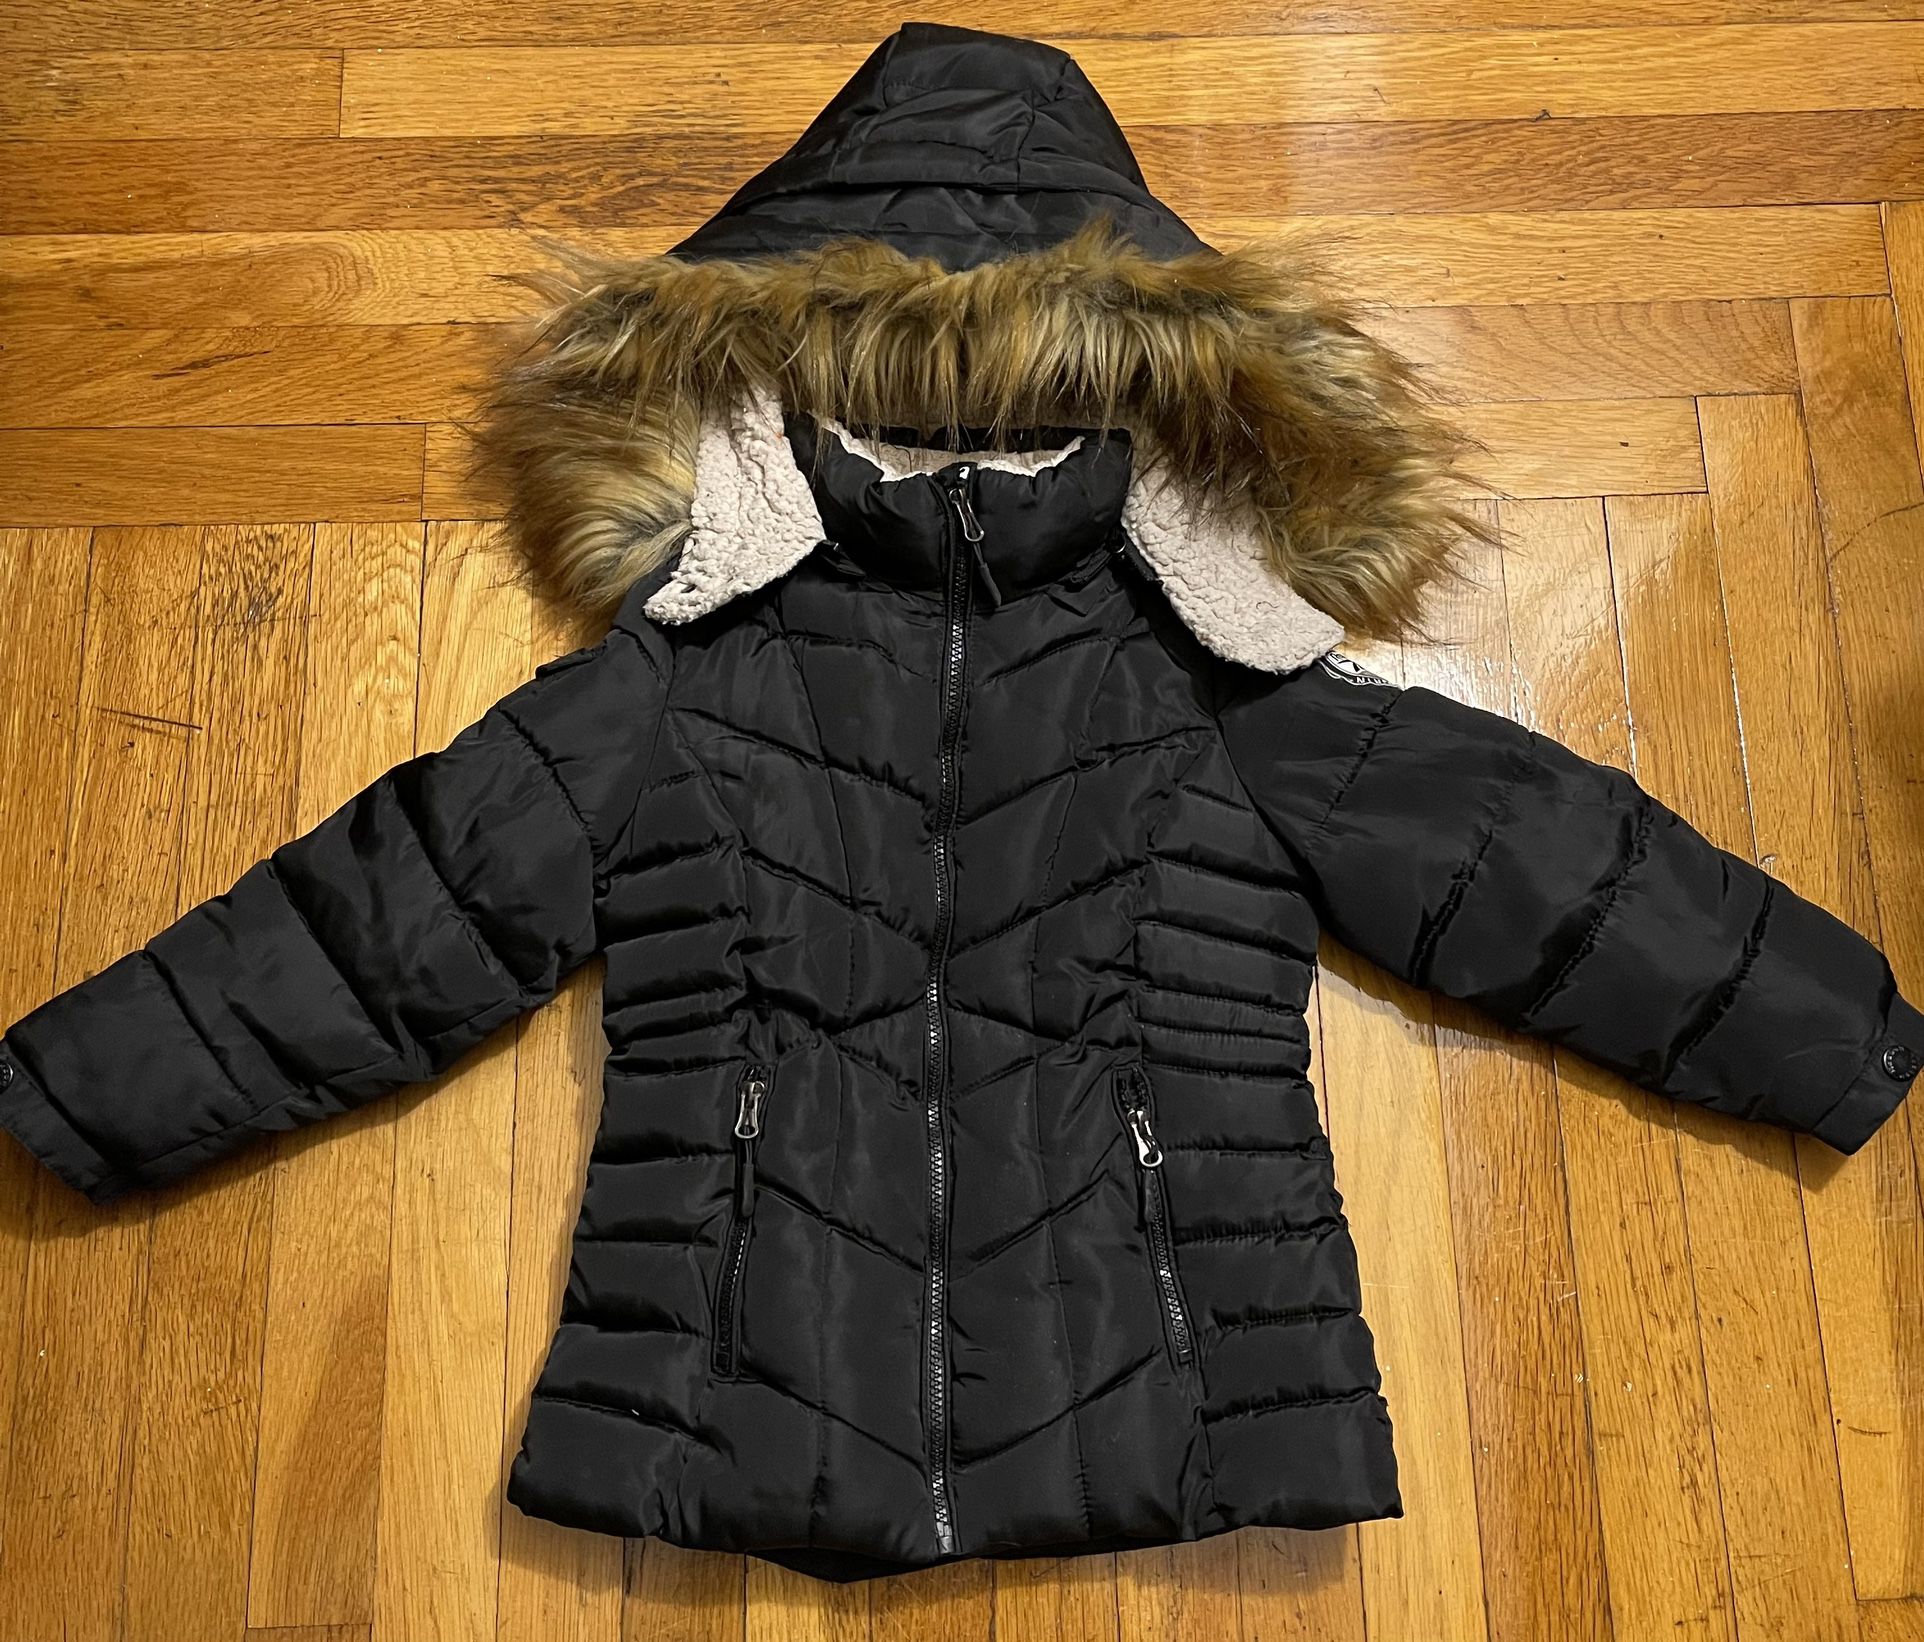 Reebok Girls Toddler Parka Insulated Puffer Jacket Size 6X Black Faux Fur Hood Trim